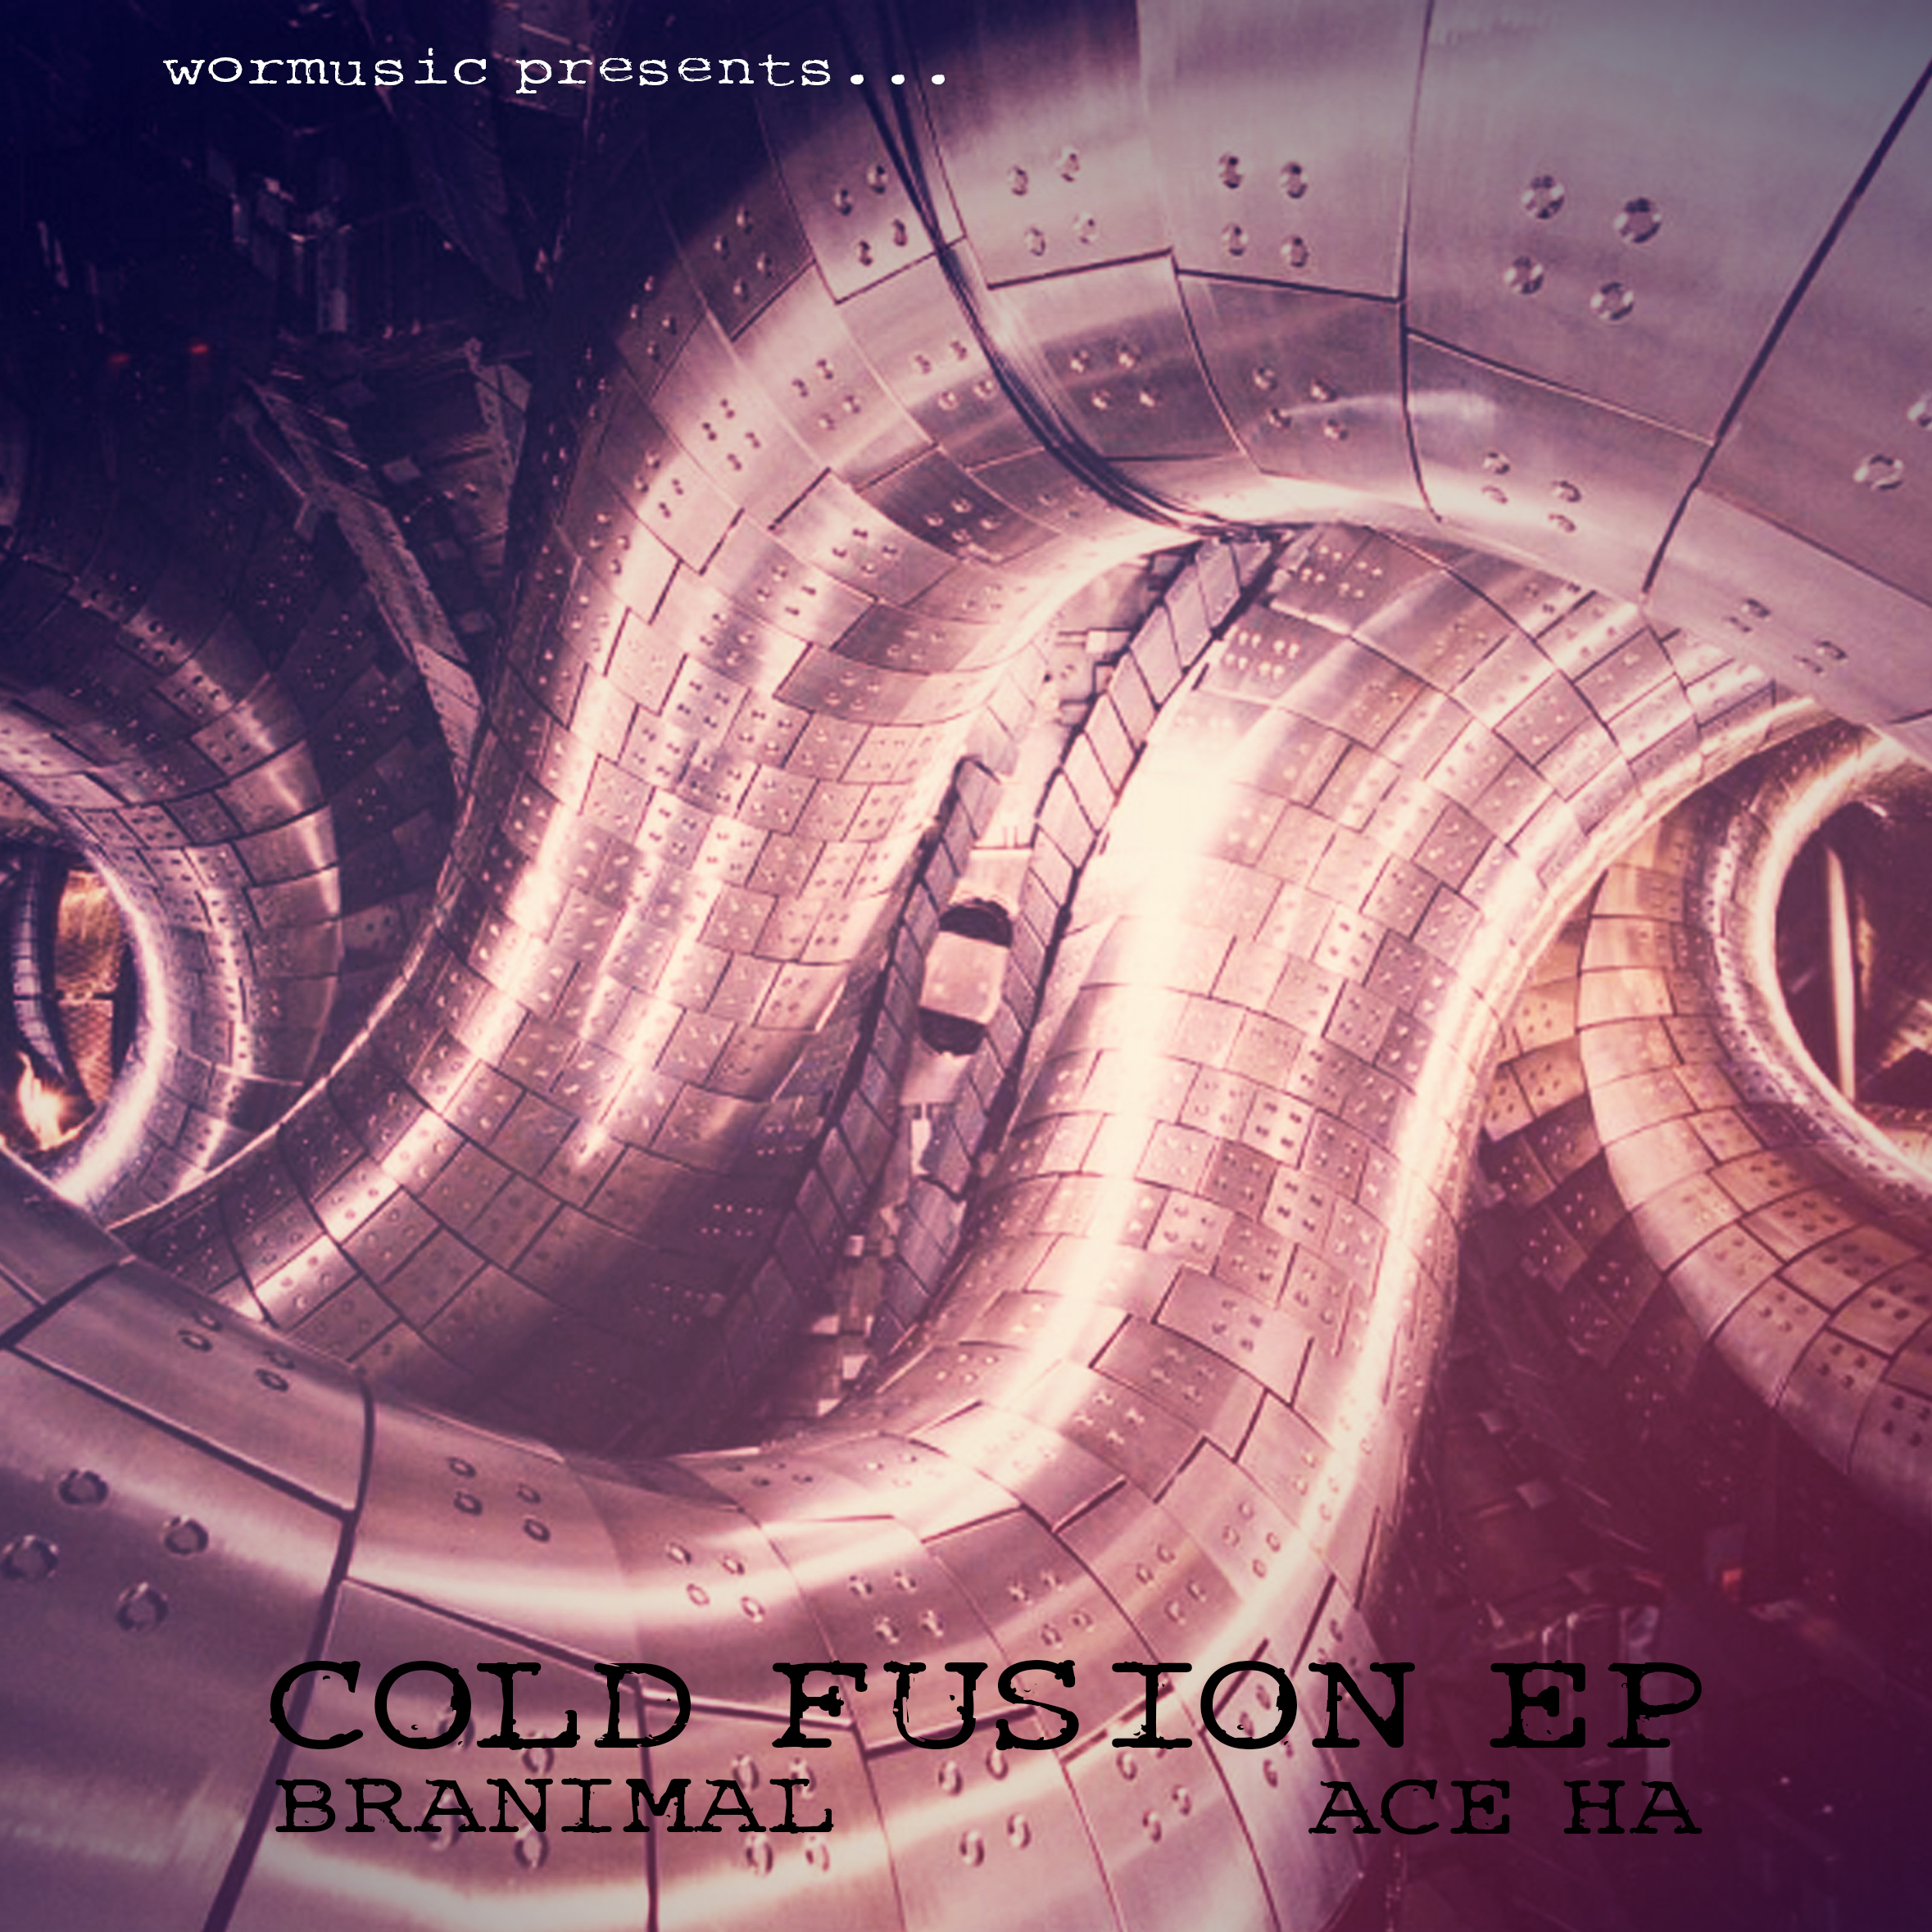 Branimal "Cold Fusion" Release | @ChannelBranimal @thejabberbox @wormusic